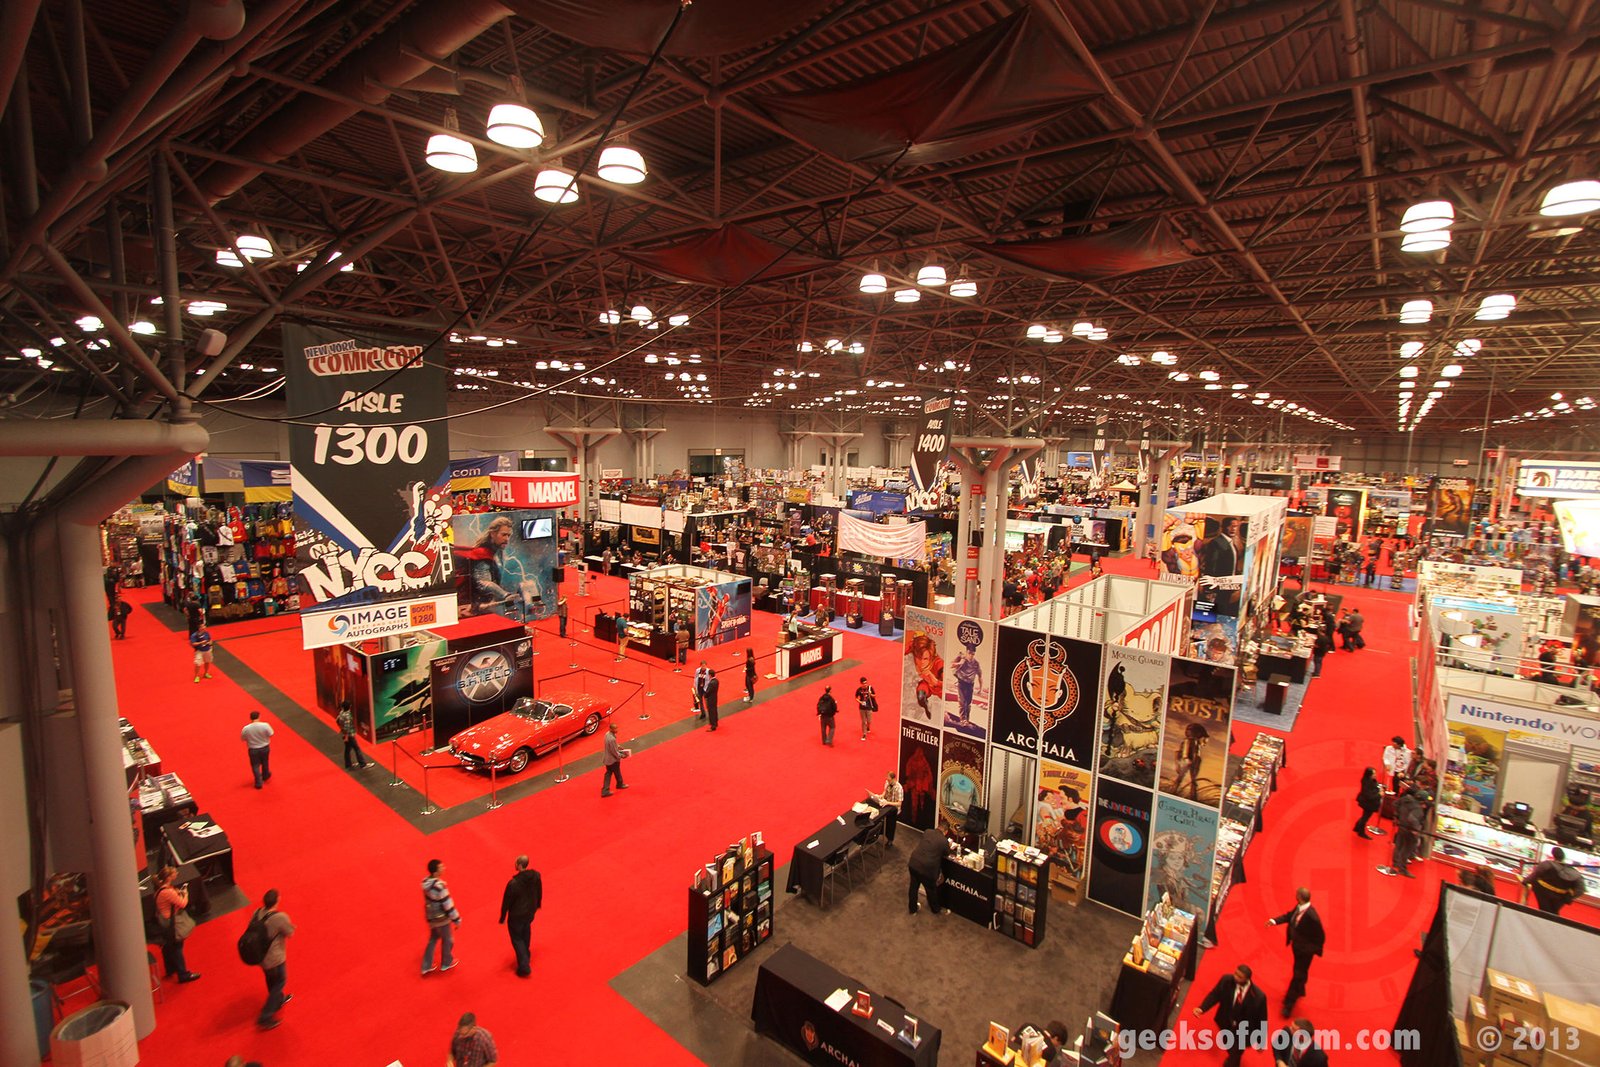 NYCC 2013: Convention Floor 022250 x 1500